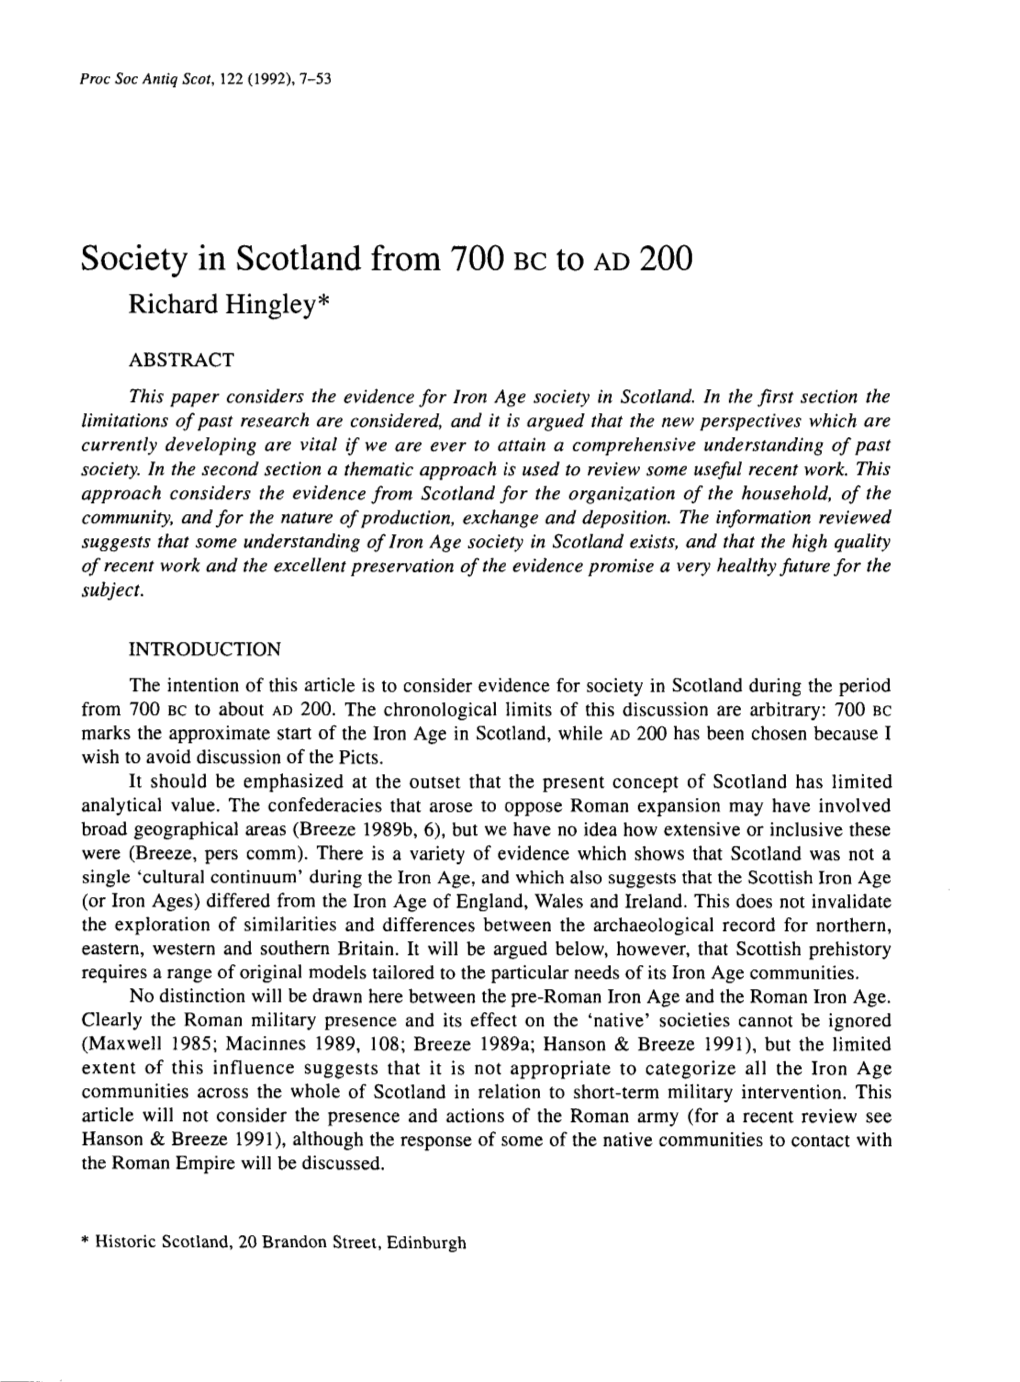 Society in Scotland from 700 BC to AD 200 Richard Hingley*